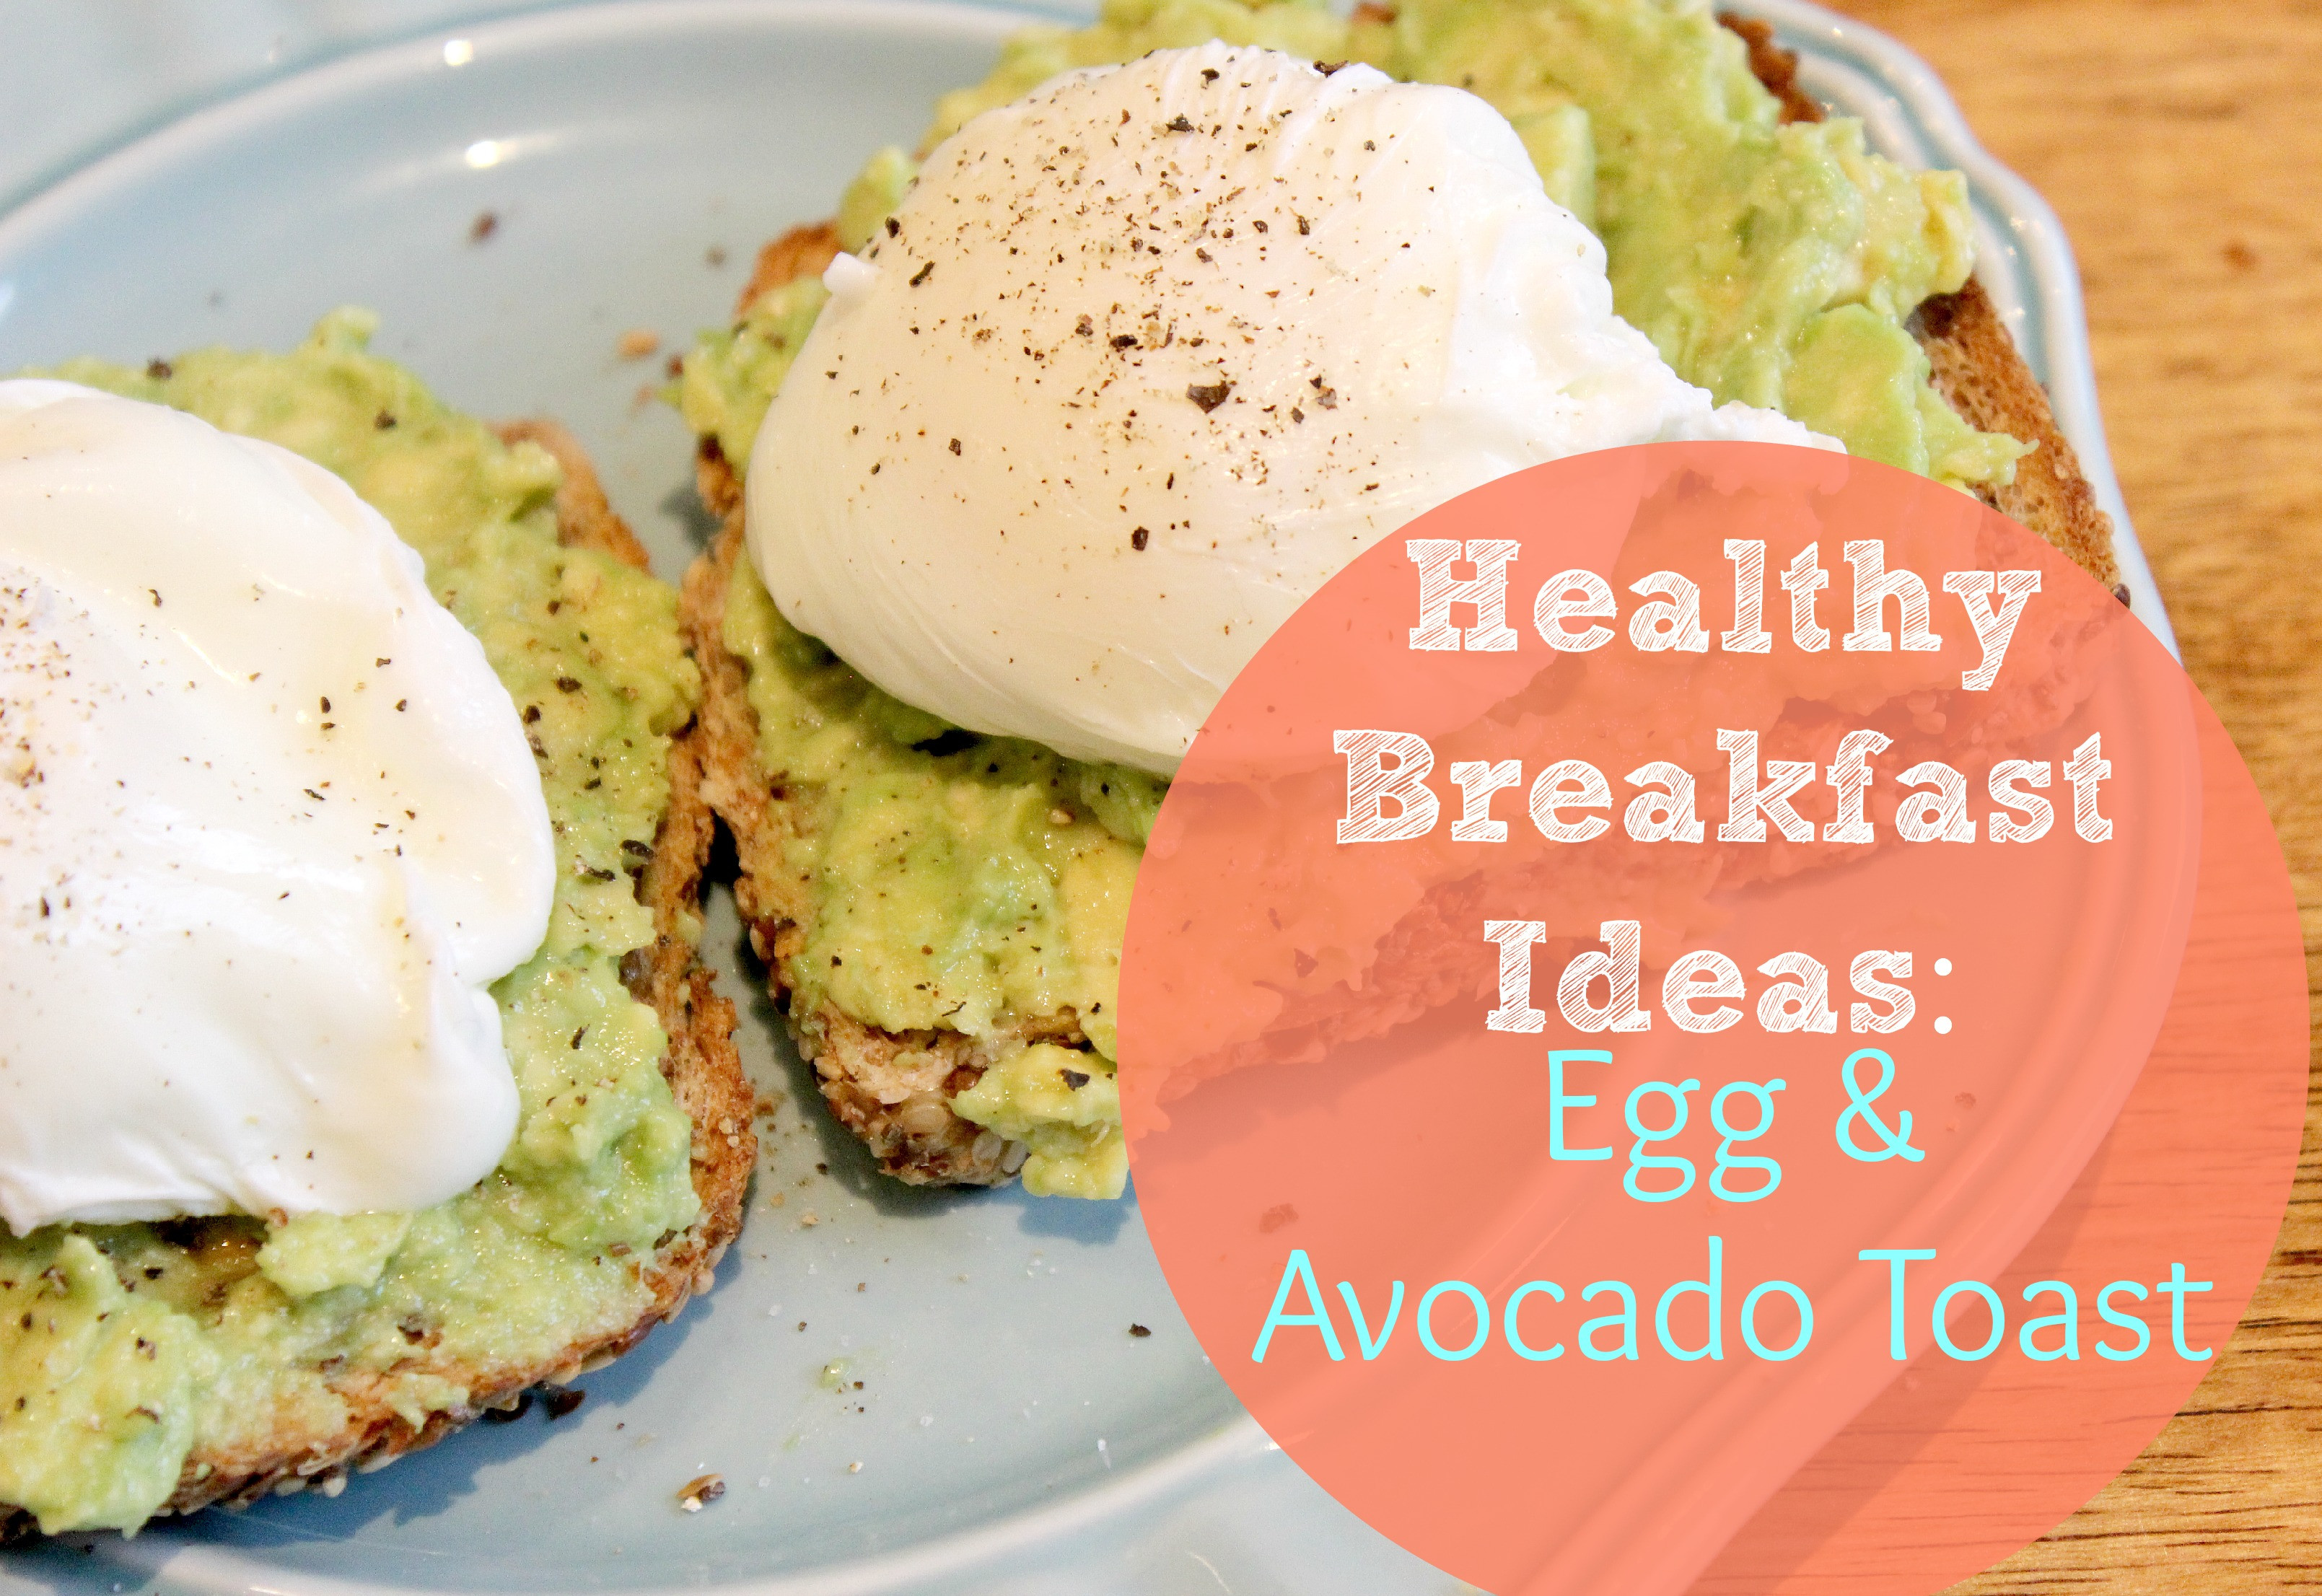 Healthy Breakfast Ideas With Eggs
 Healthy Breakfast Recipes